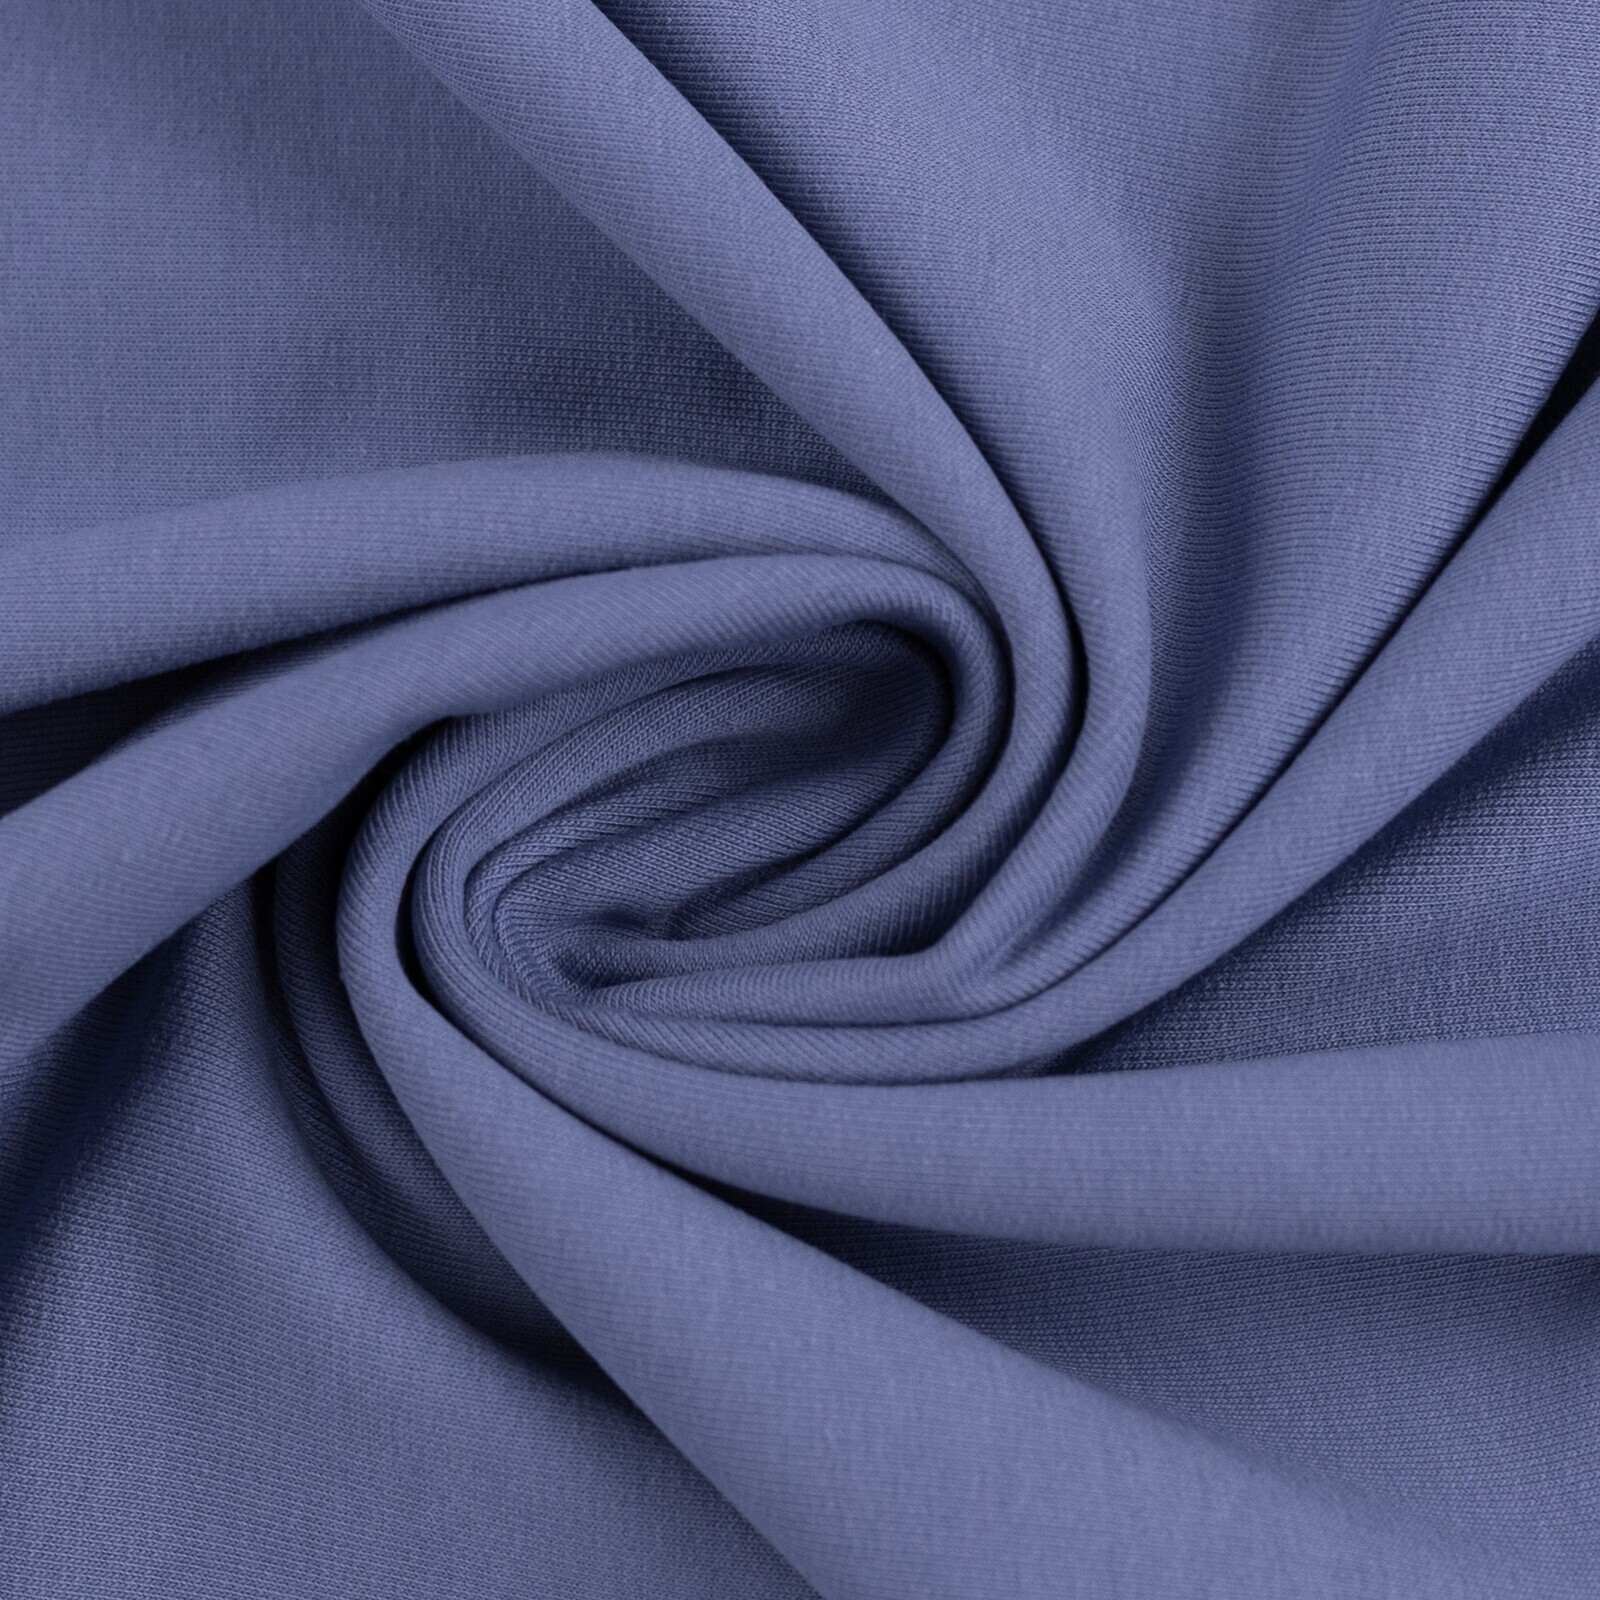 European Cotton Elastane Lycra Jersey, Solid Baby Blue Knit Fabric